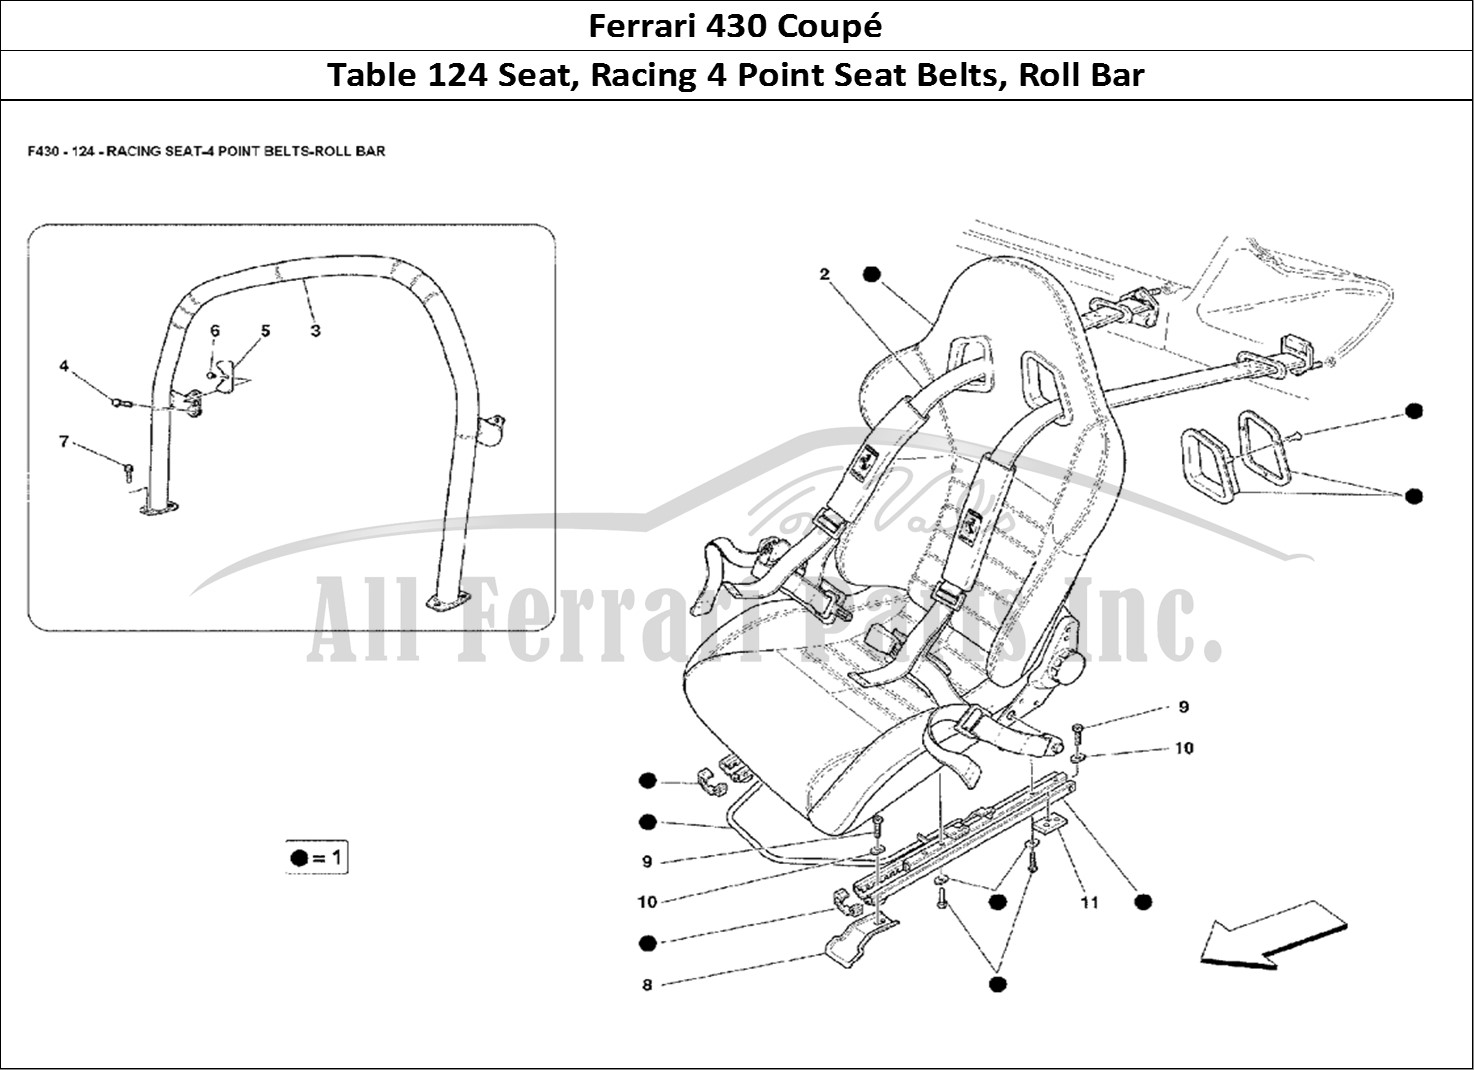 Ferrari Parts Ferrari 430 Coup Page 124 Racing Seat-4 Point Belts